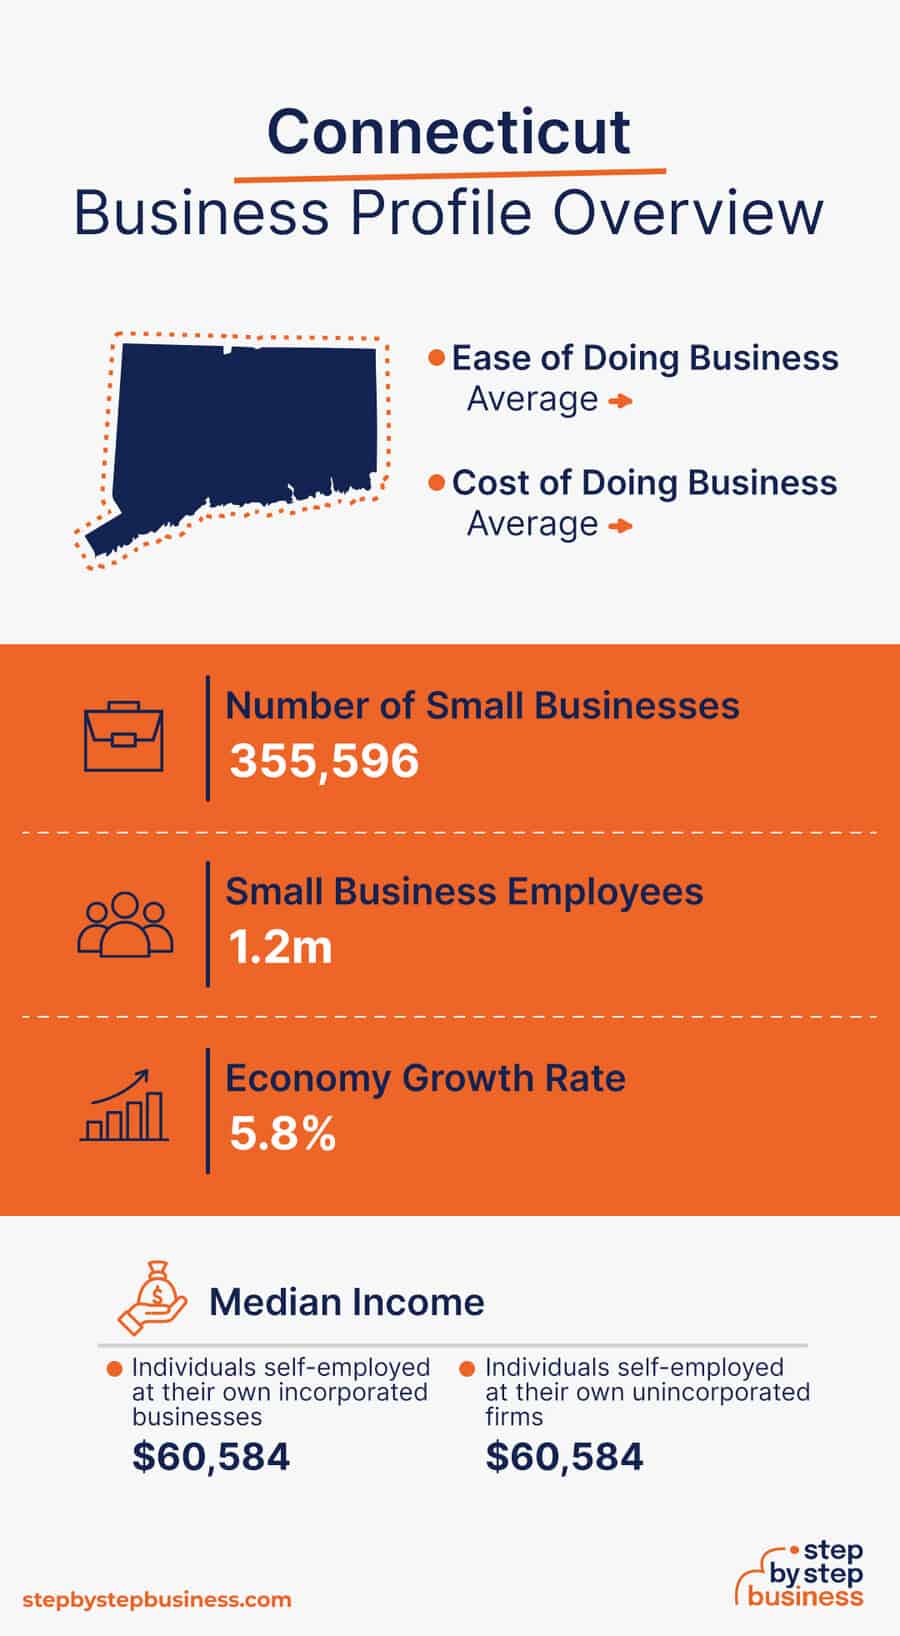 Connecticut Business Profile Overview